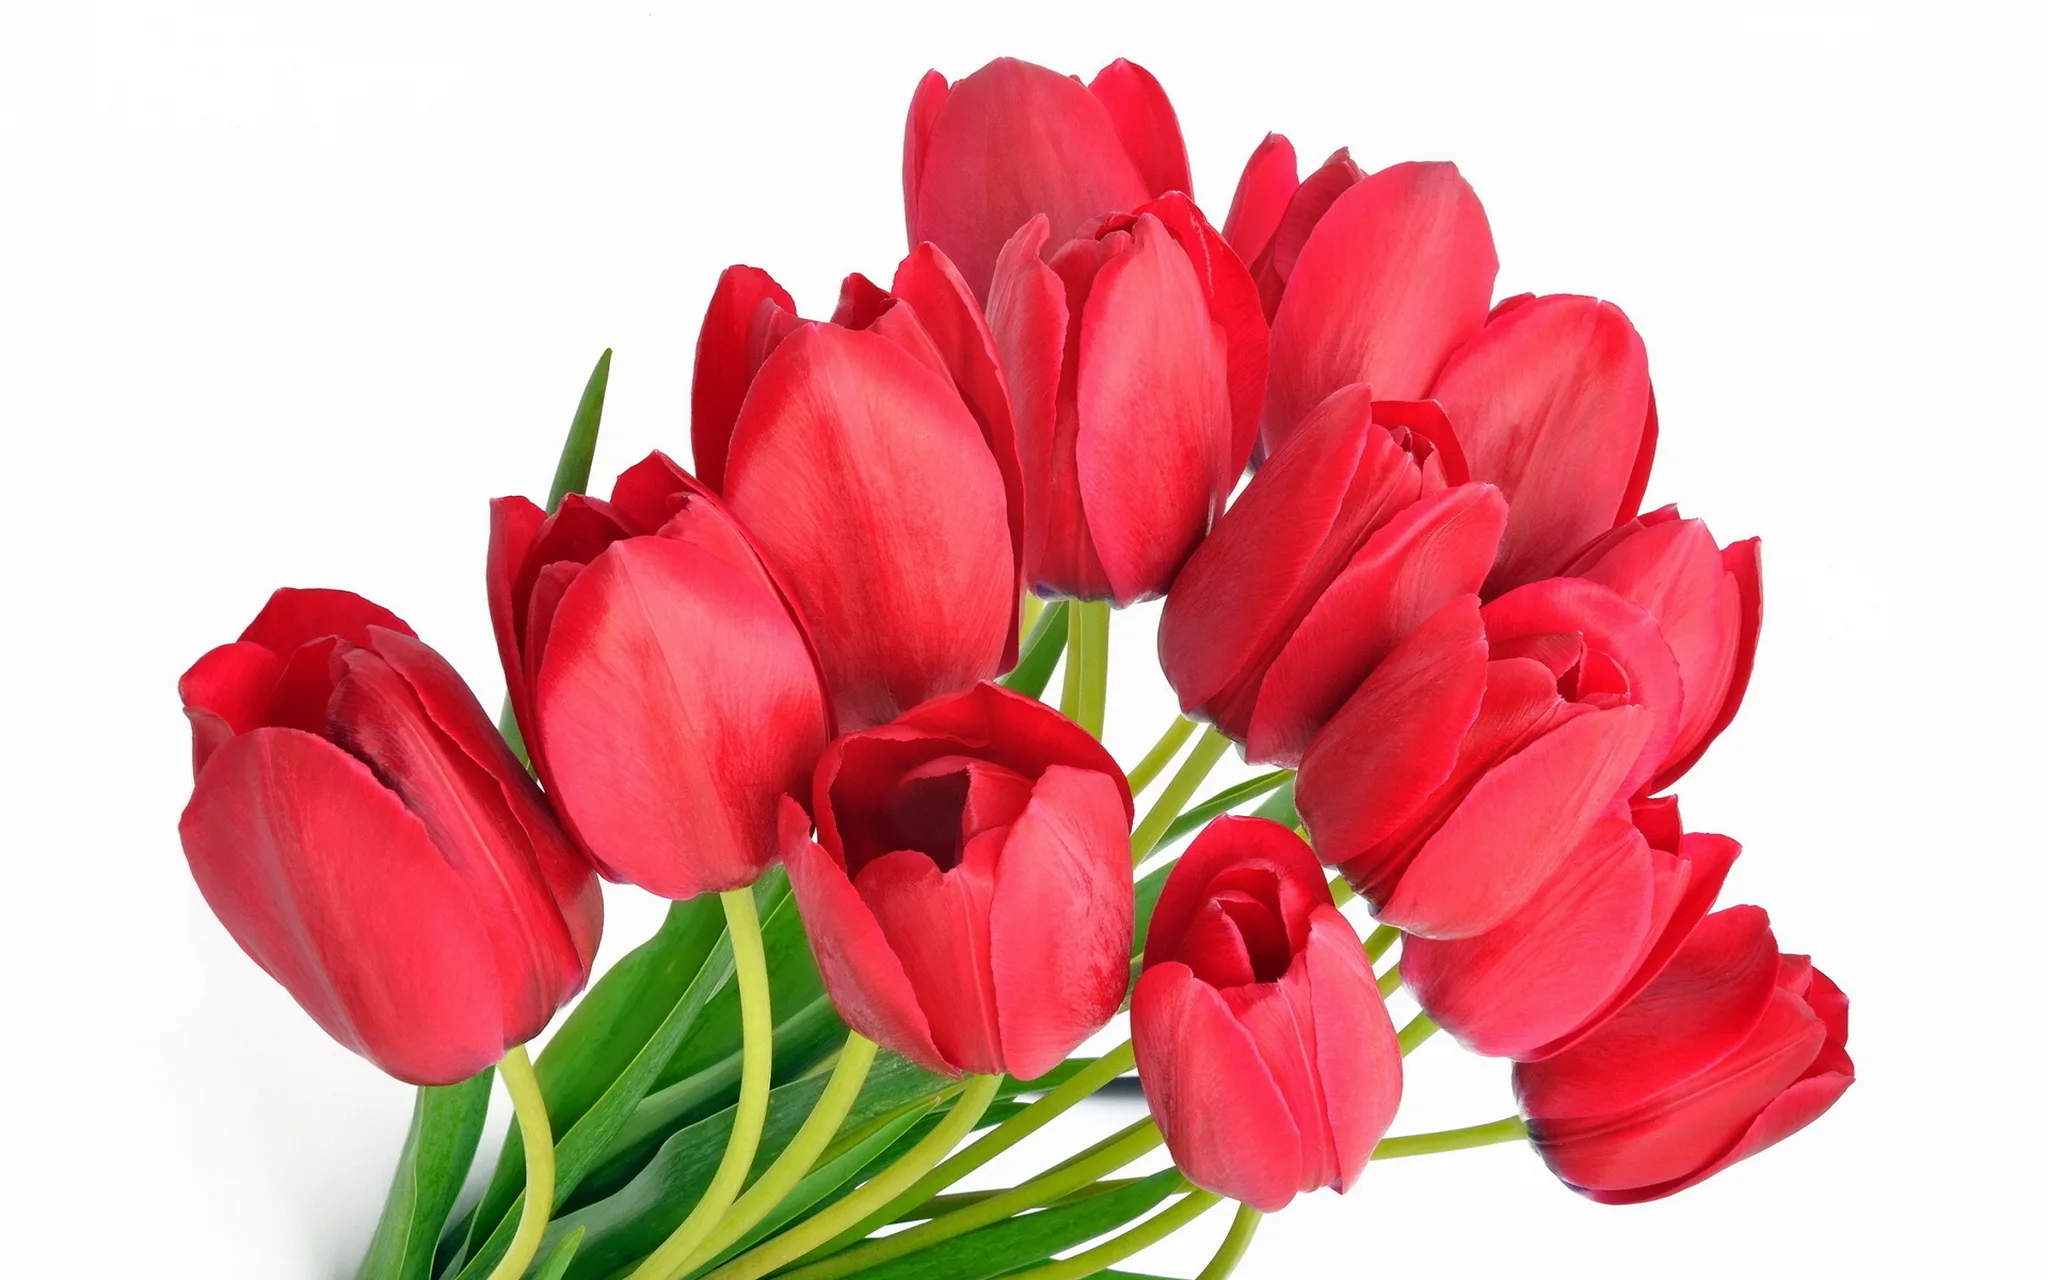 8 mart rasm. С 8 мартом тюльпаны. Цветы тюльпаны. Красные тюльпаны. Тюльпаны открытка.